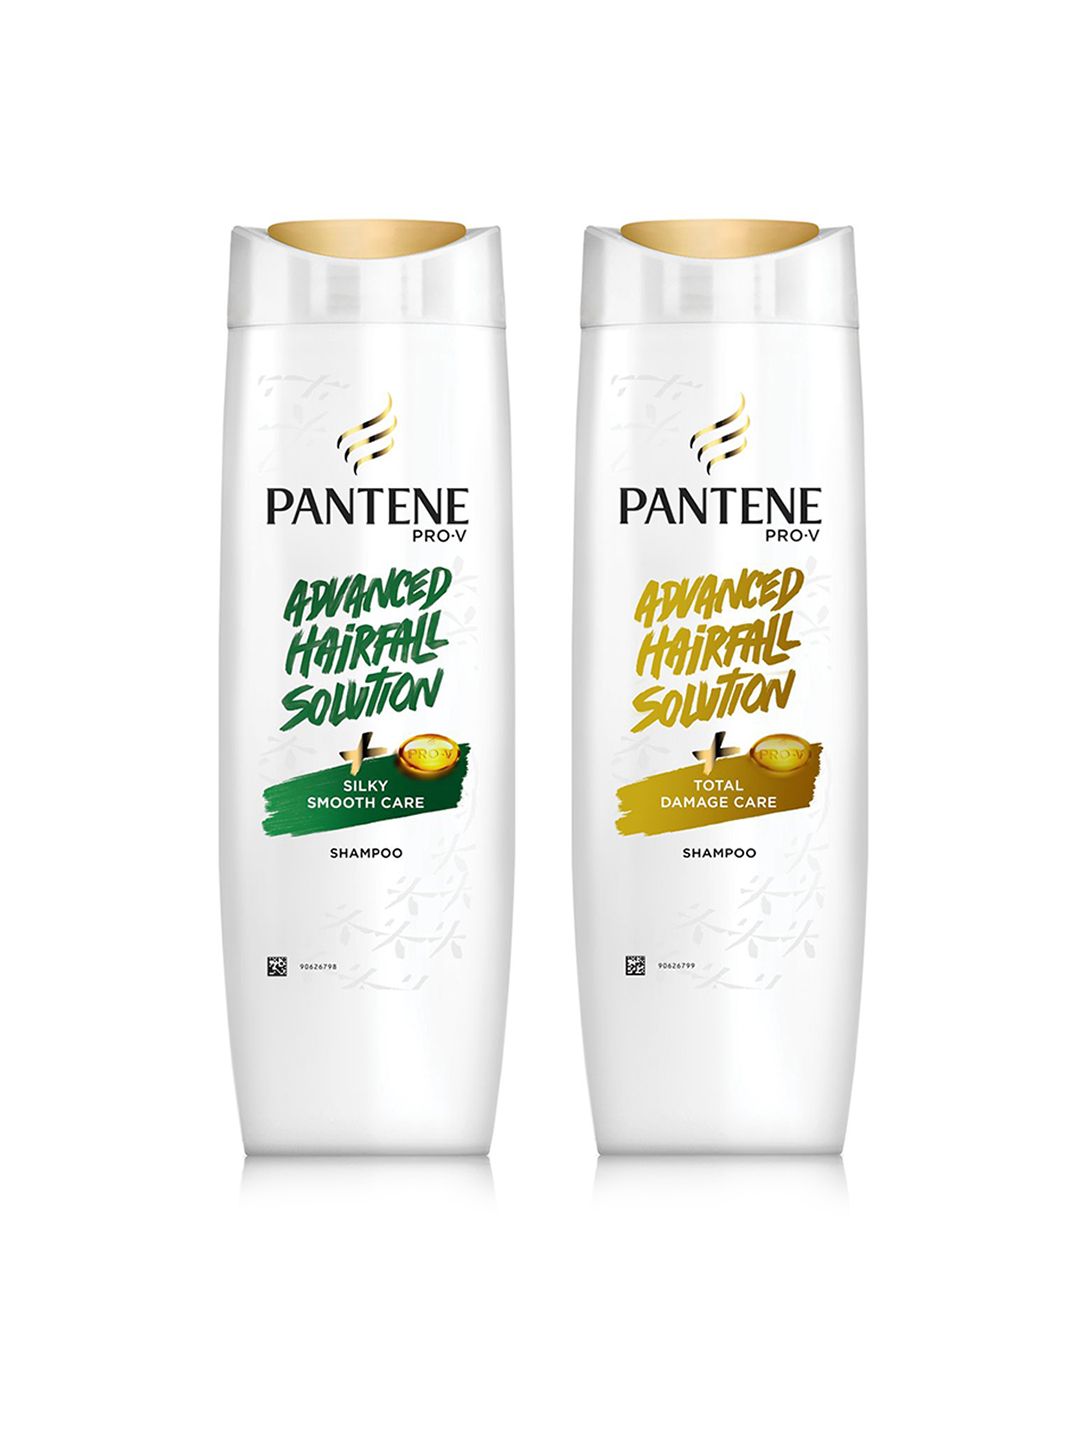 Pantene Set of 2 Shampoos Price in India